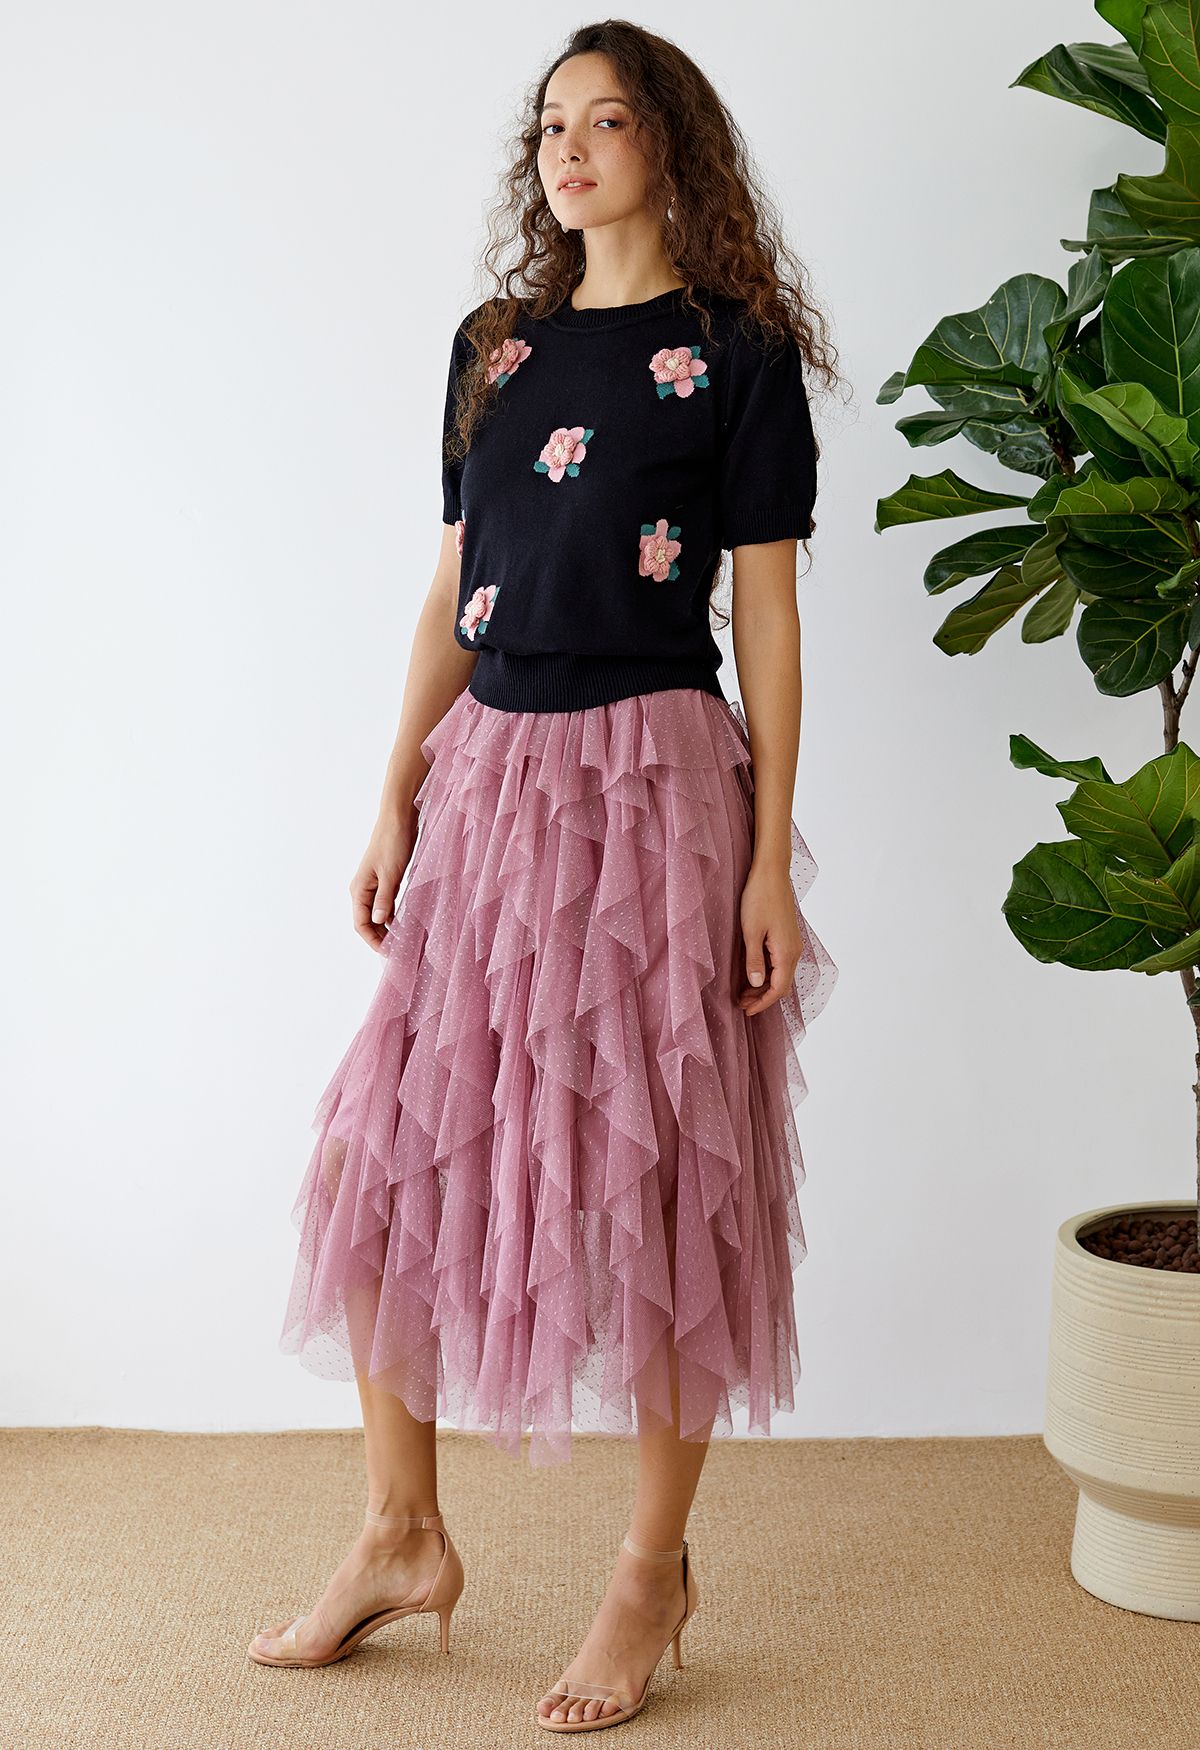 Pink Stitch Flower Short Sleeve Knit Top in Black